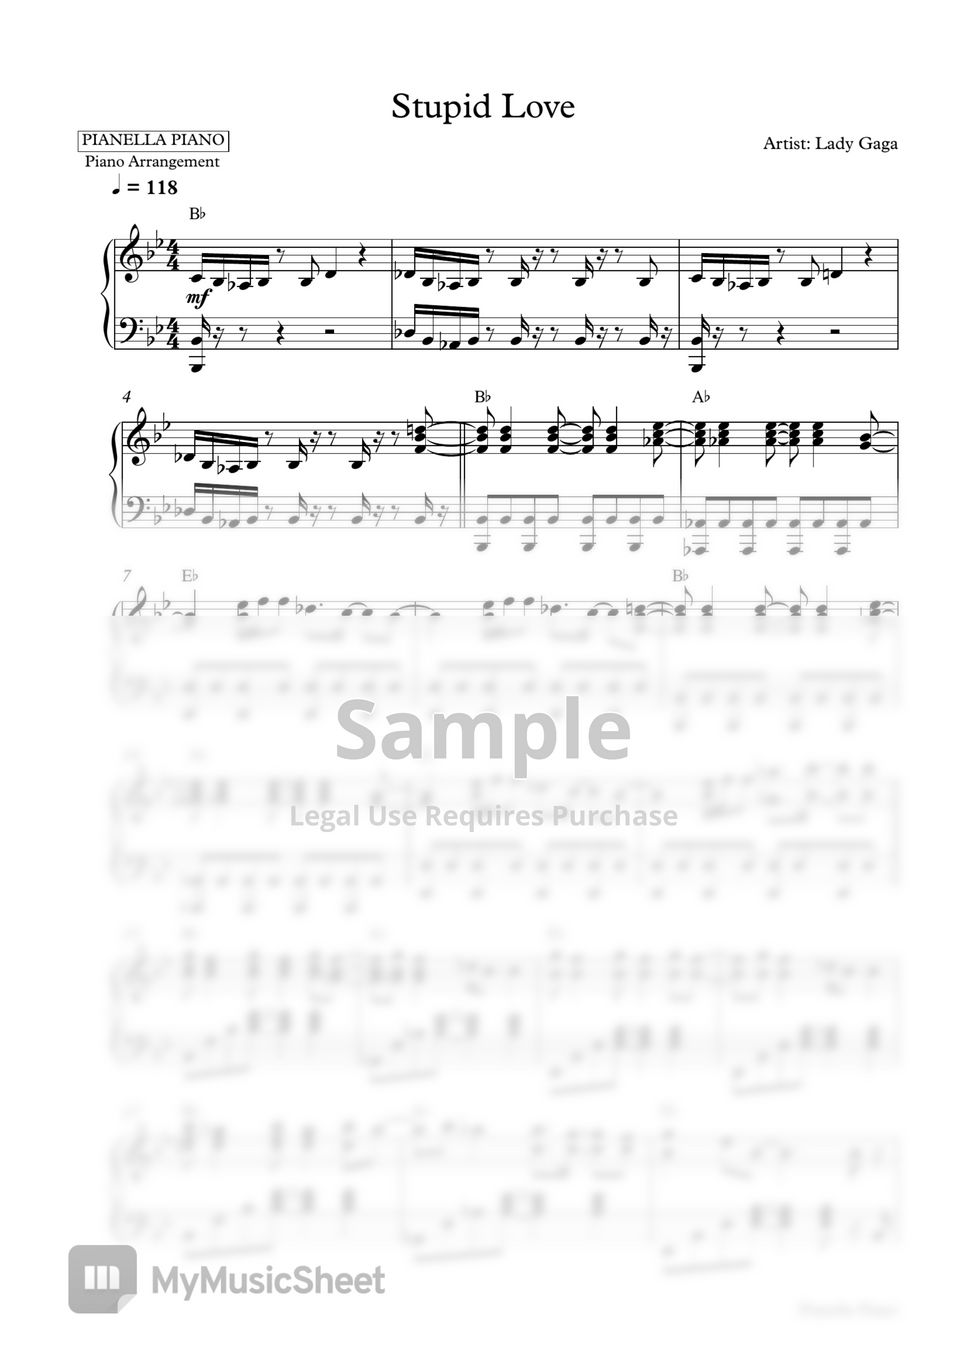 Lady Gaga - Stupid Love (Piano Sheet) by Pianella Piano